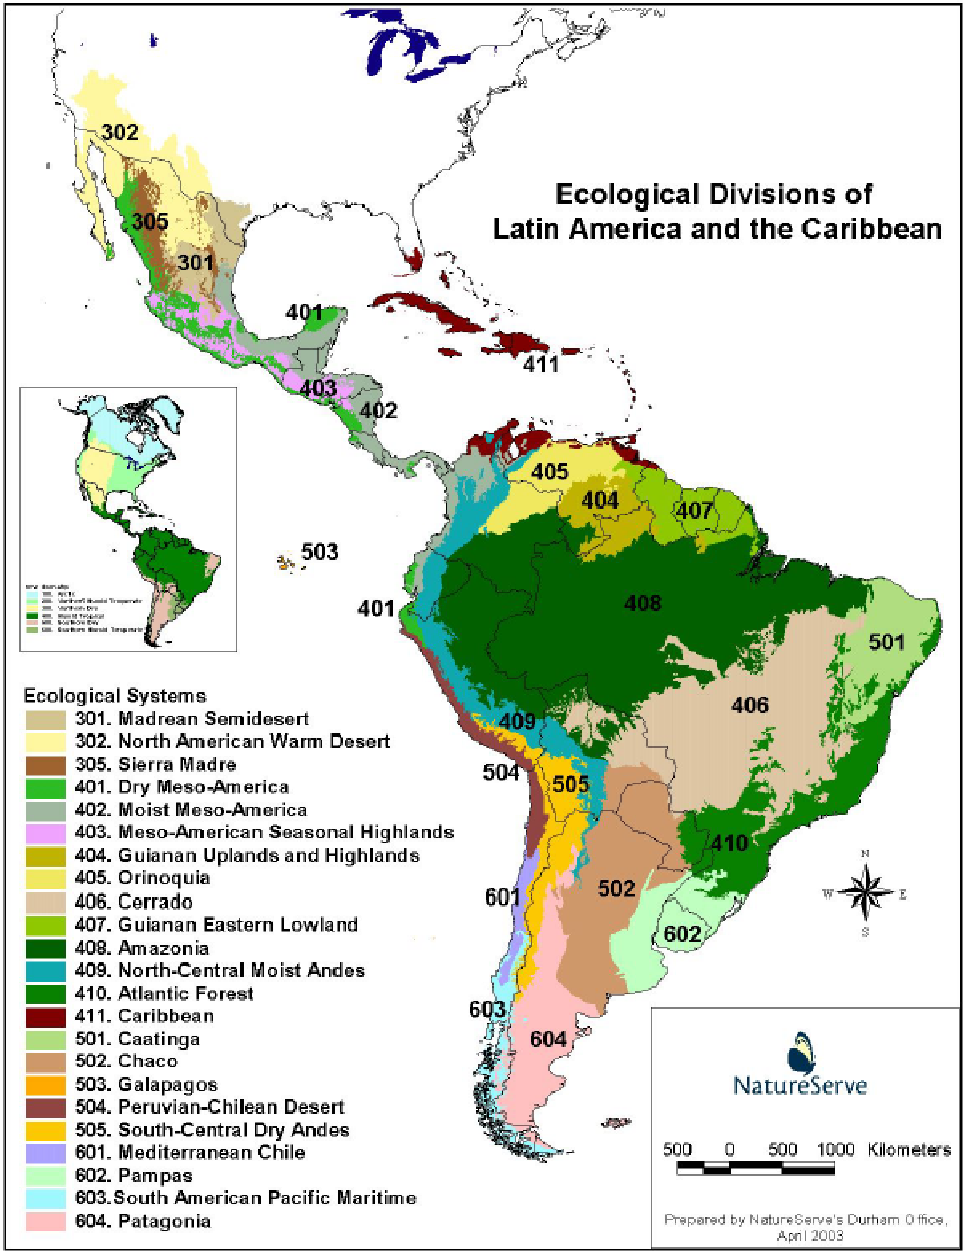 text: latinamericaecologicregions